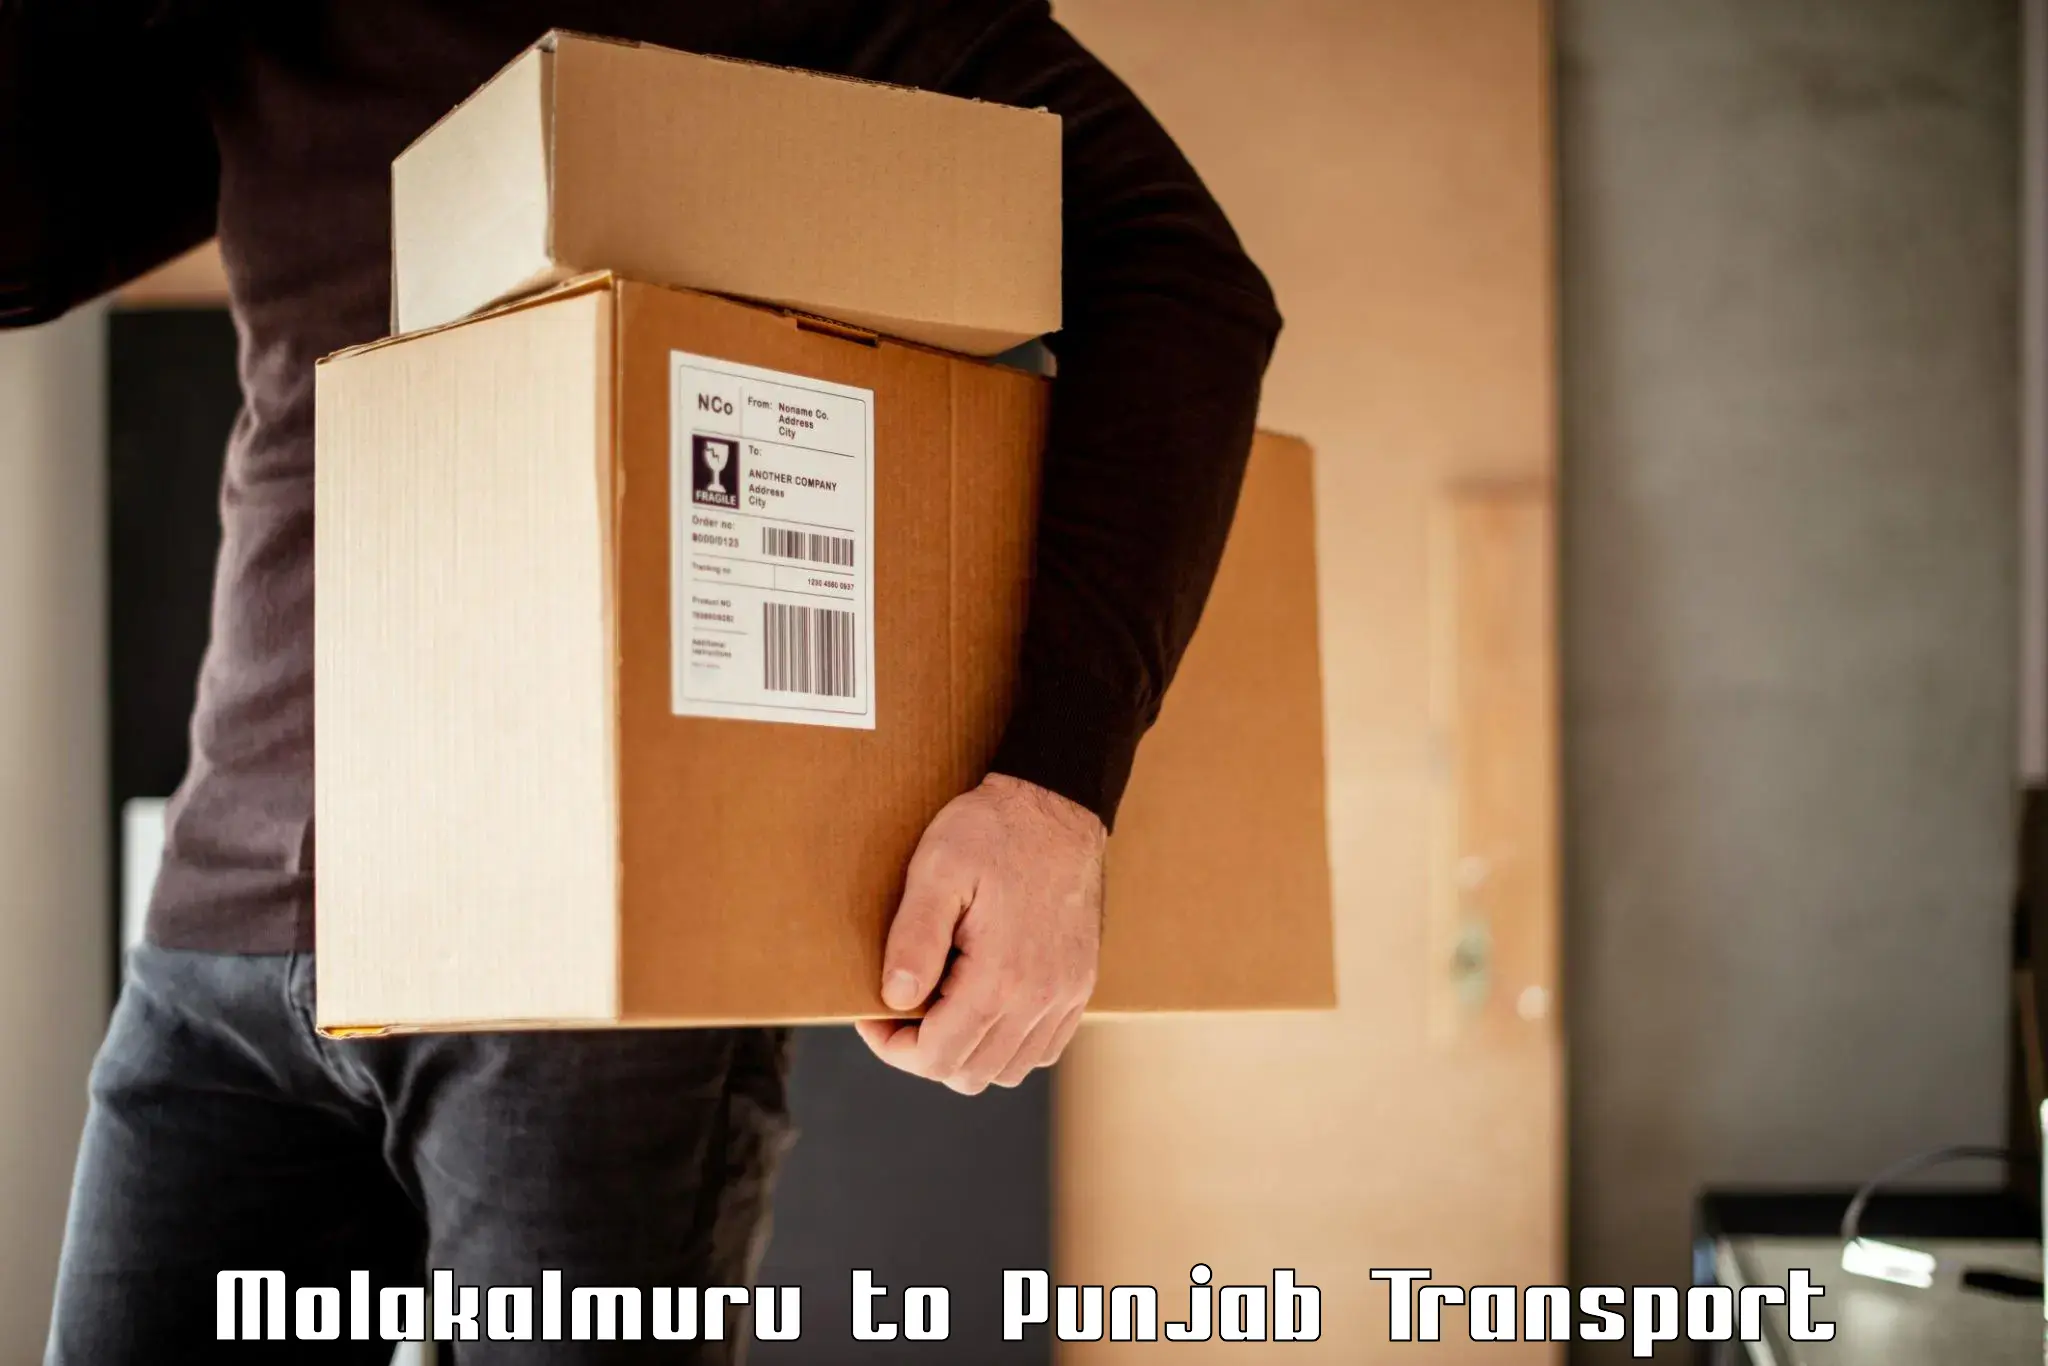 Delivery service Molakalmuru to Punjab